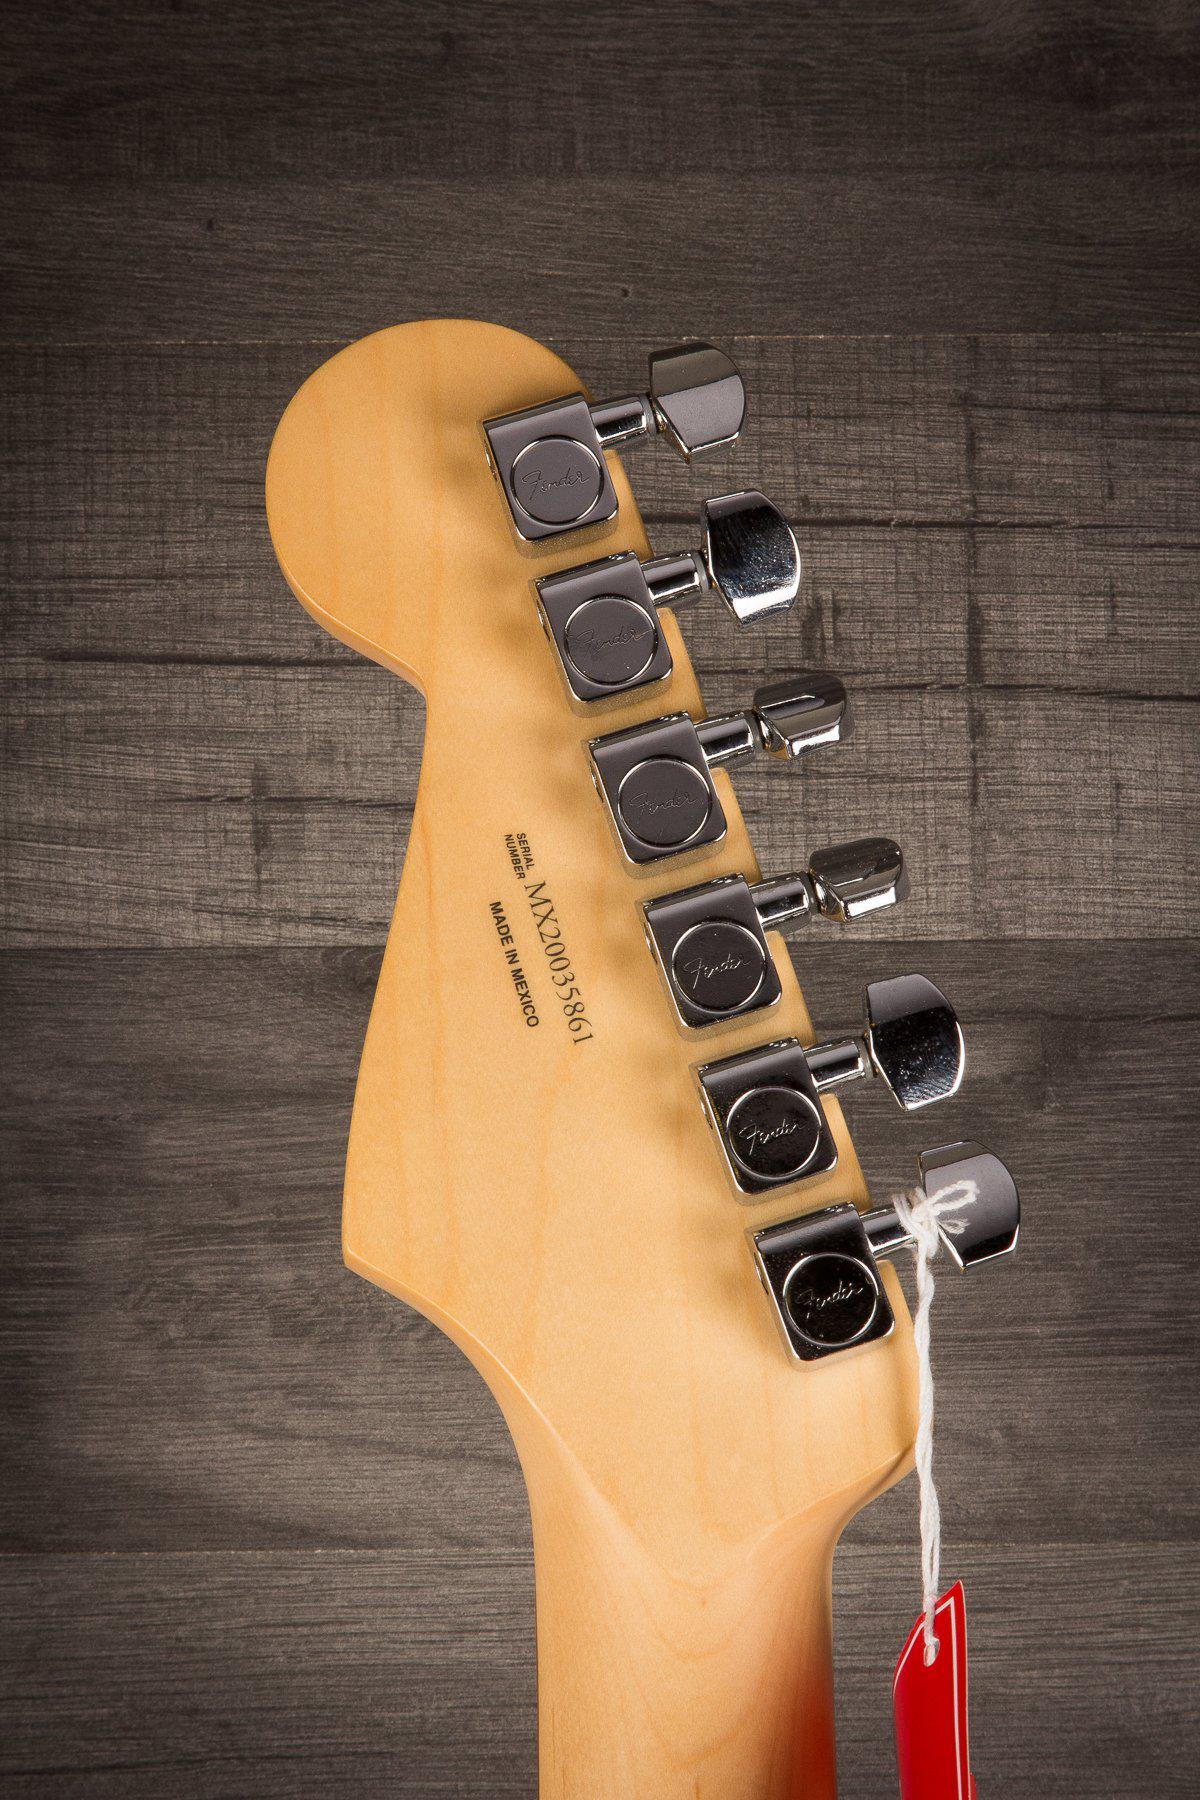 Fender Electric Guitar Fender Player Series Stratocaster - Polar White - Pau Ferro